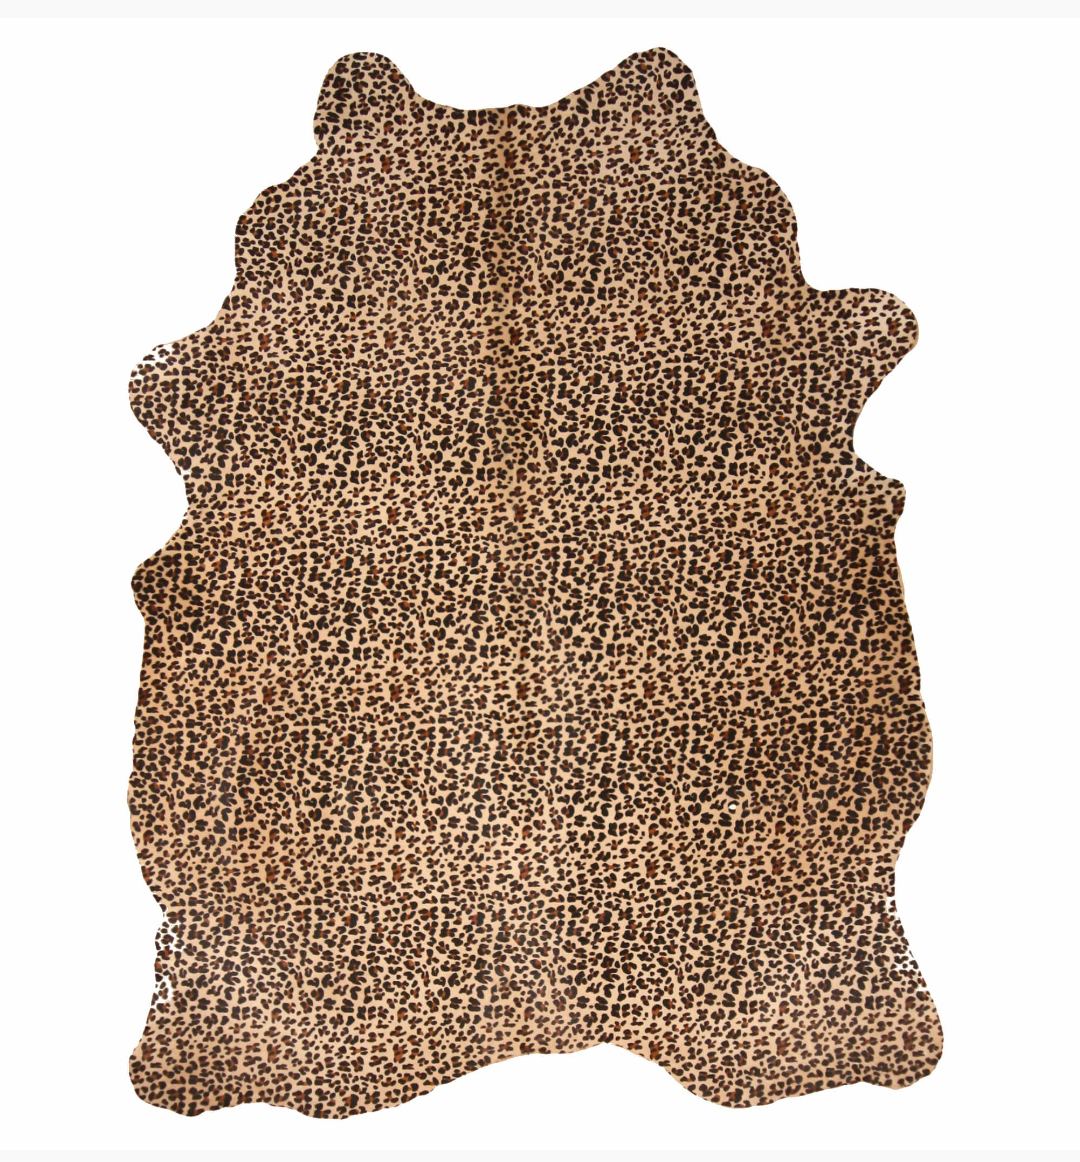 Cowhide - Leopard